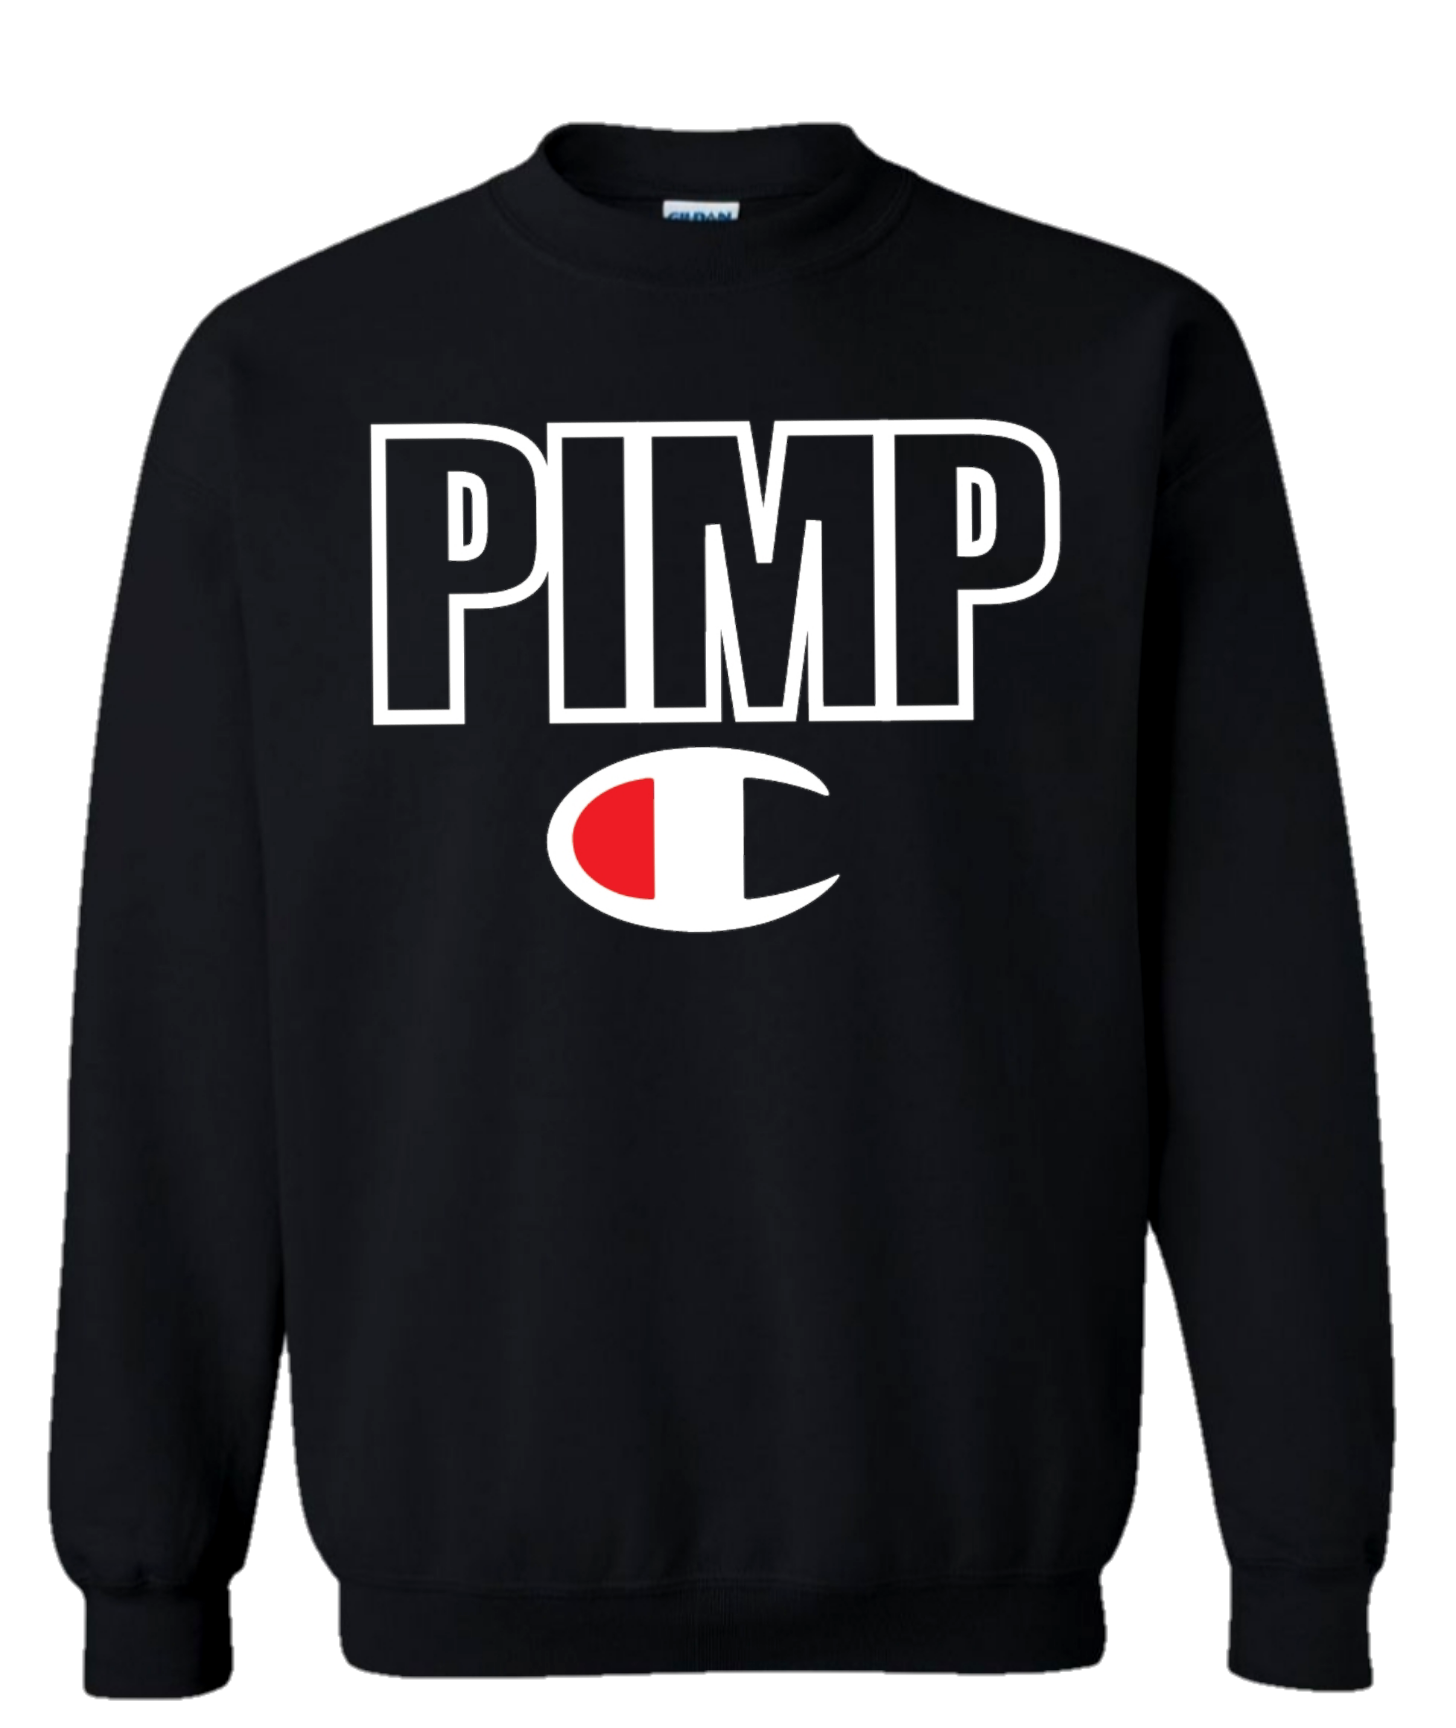 Black Pimp C Champion Crewneck Sweatshirt